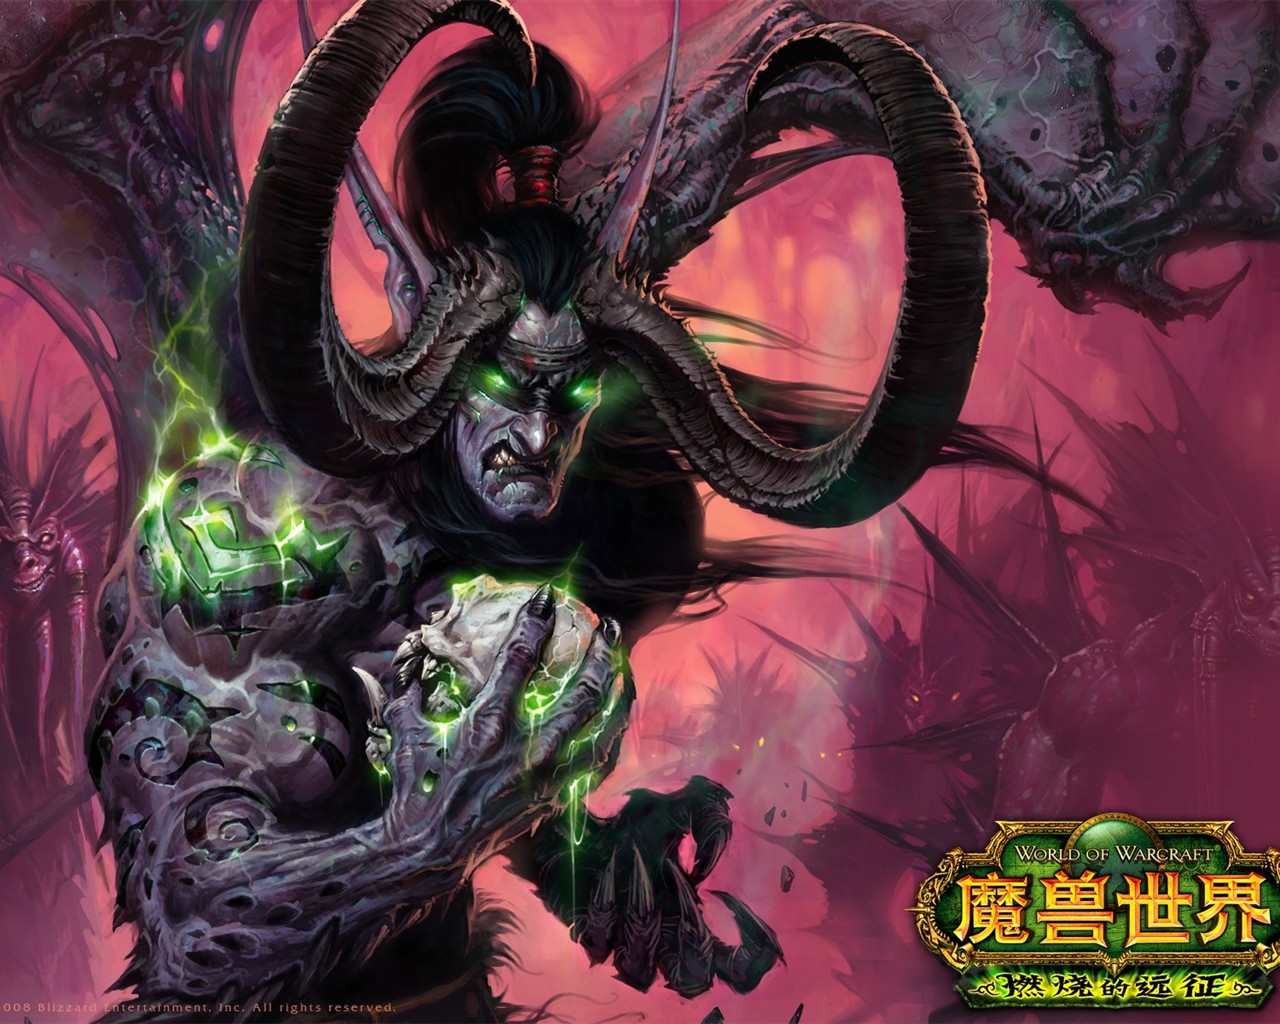 World of Warcraft: fondo de pantalla oficial de The Burning Crusade (2) #27 - 1280x1024